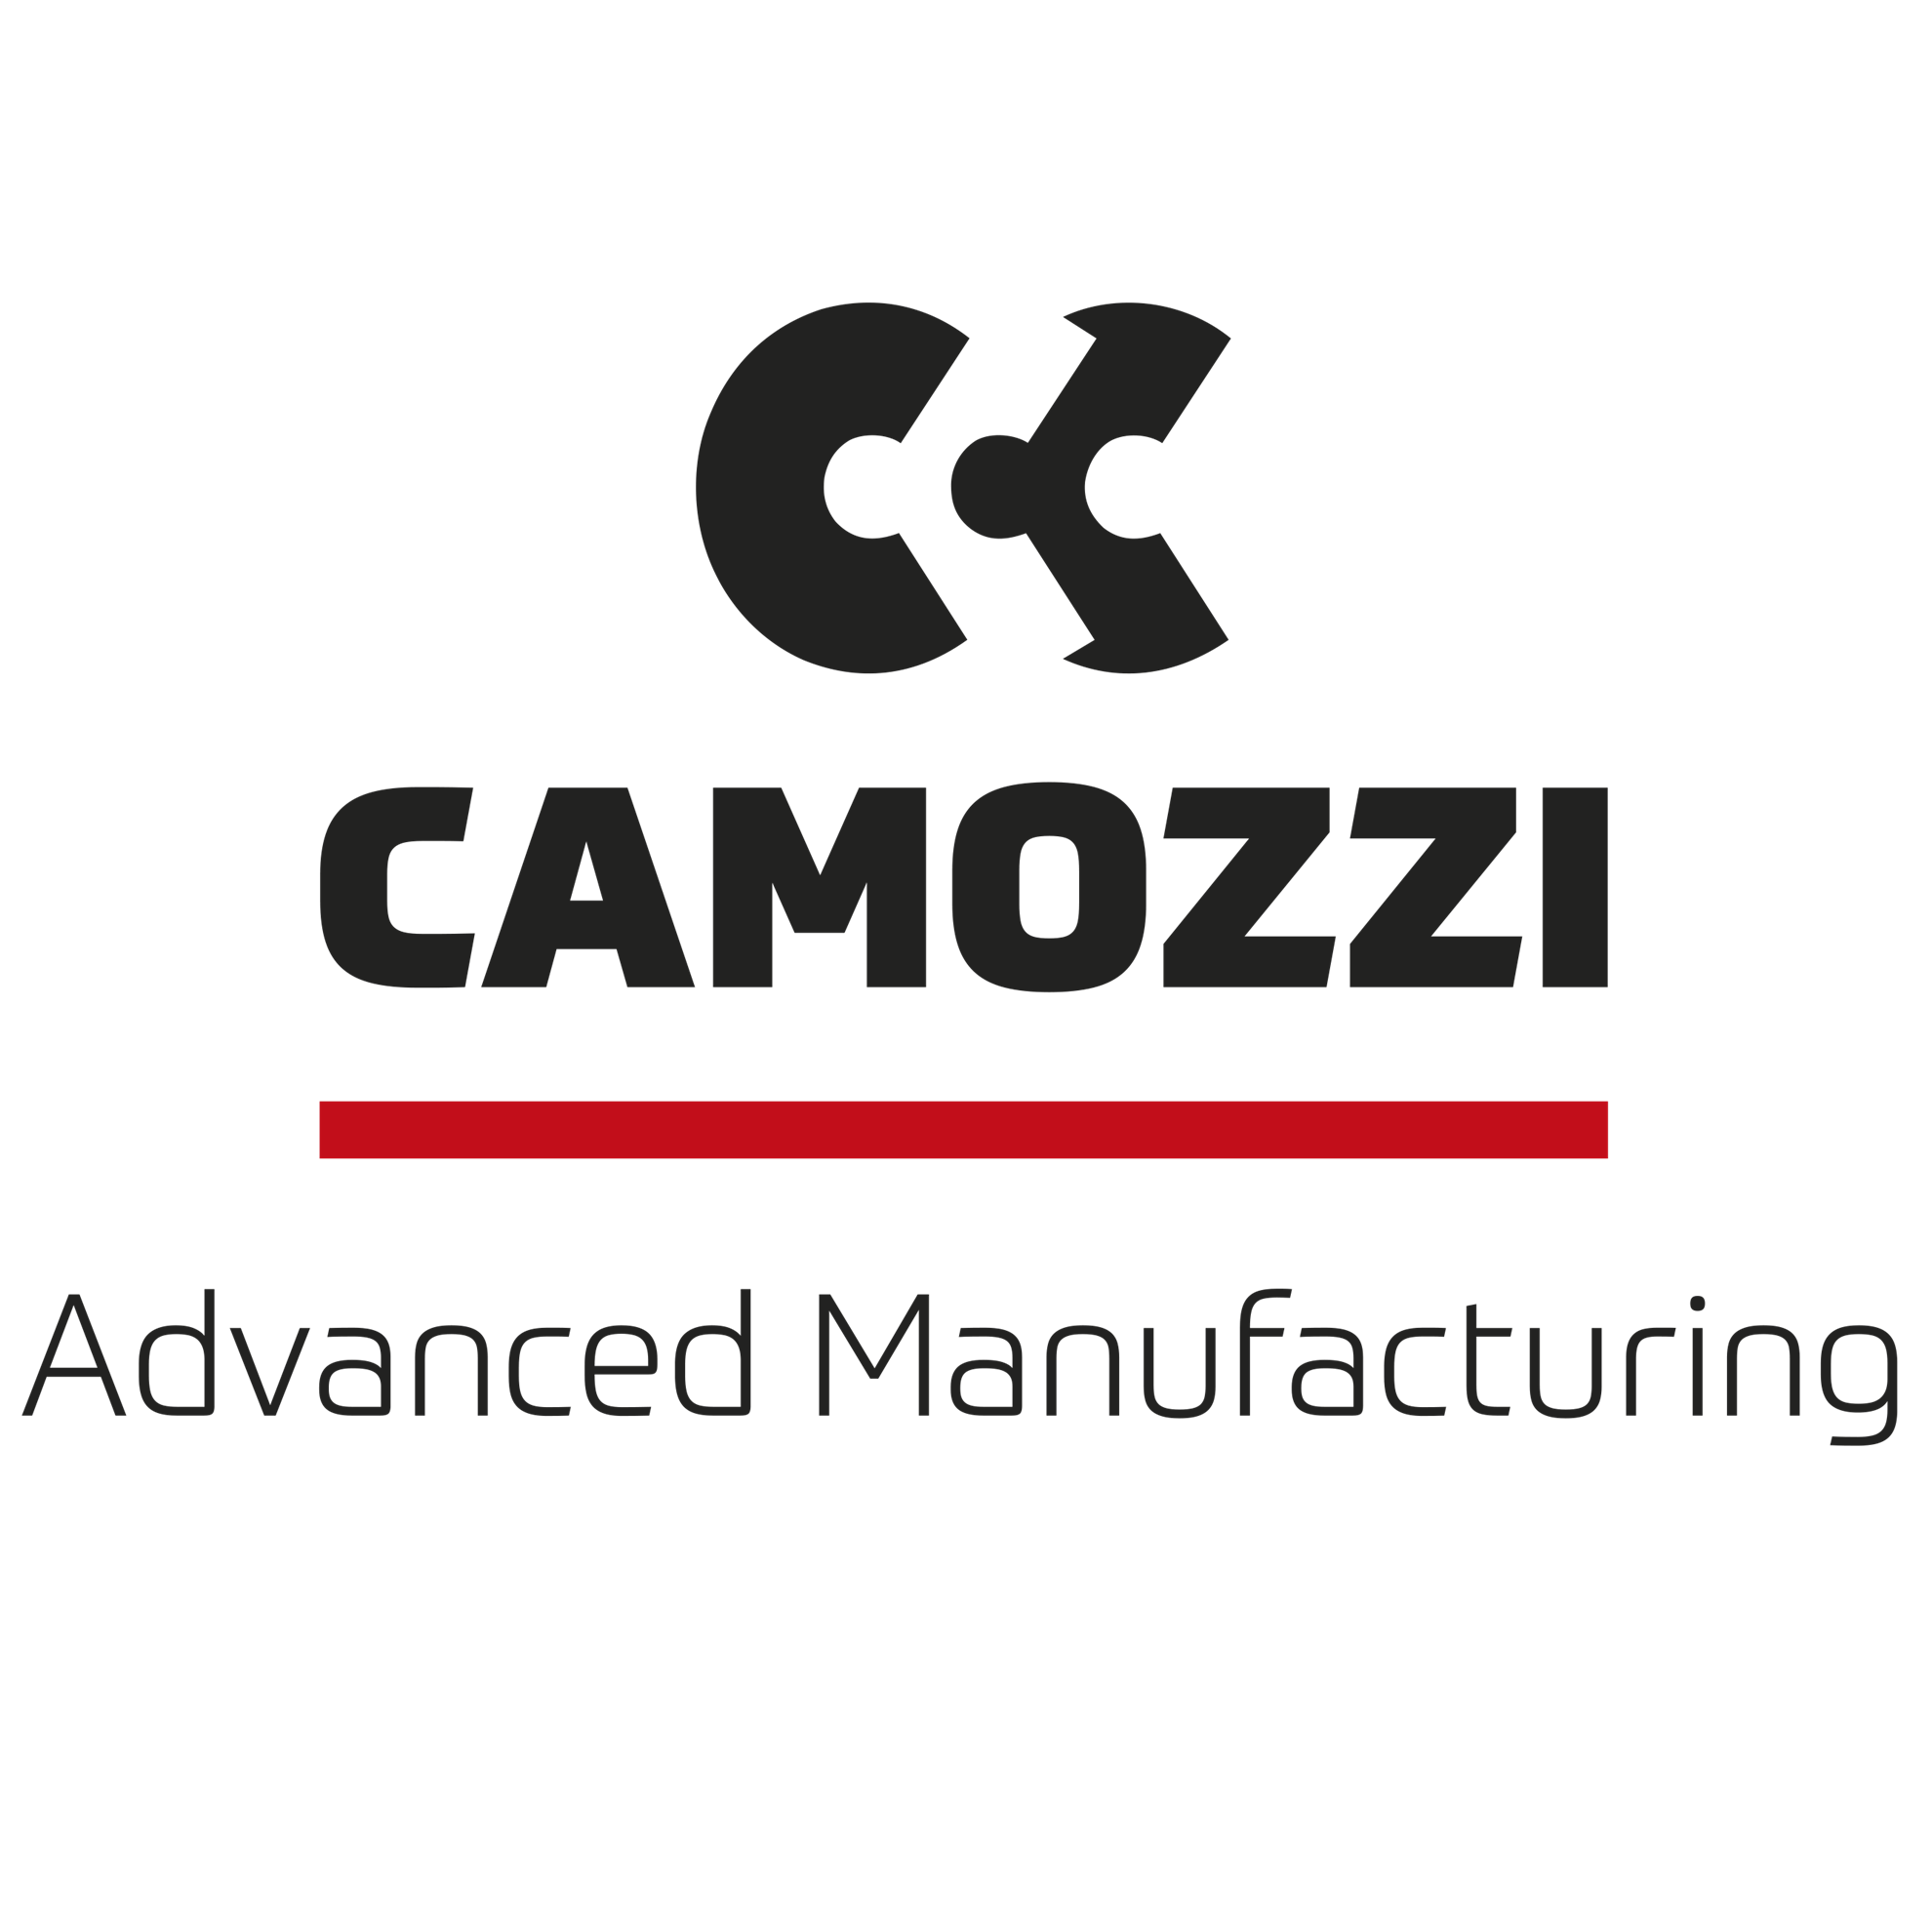 Camozzi Advanced Manufacturing